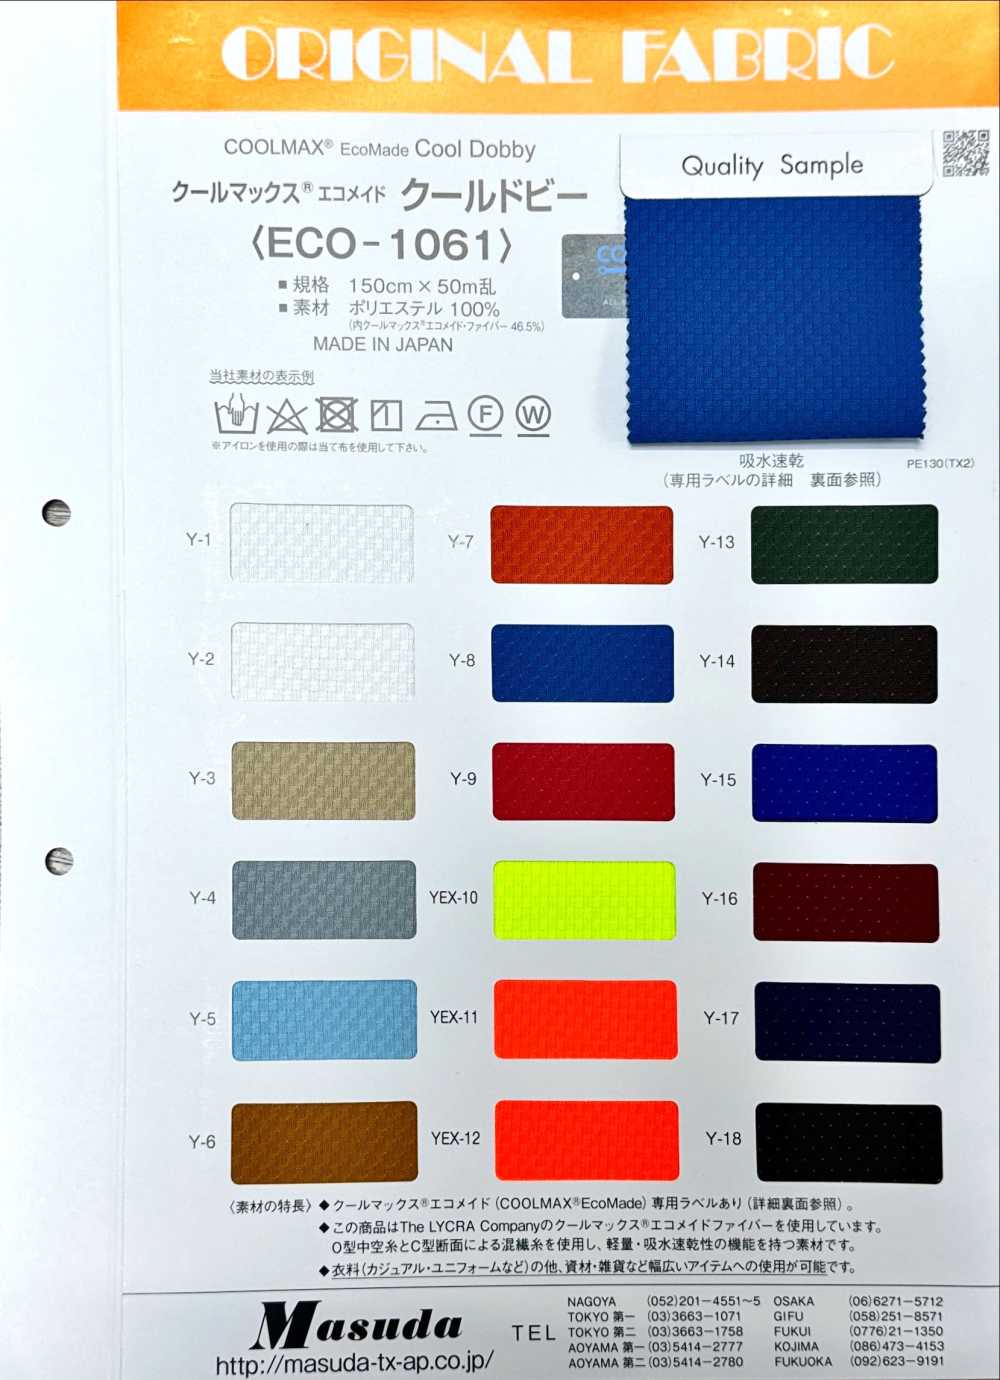 ECO-1061 Coolmax® Ecomade Cool Dobby[Textilgewebe] Masuda